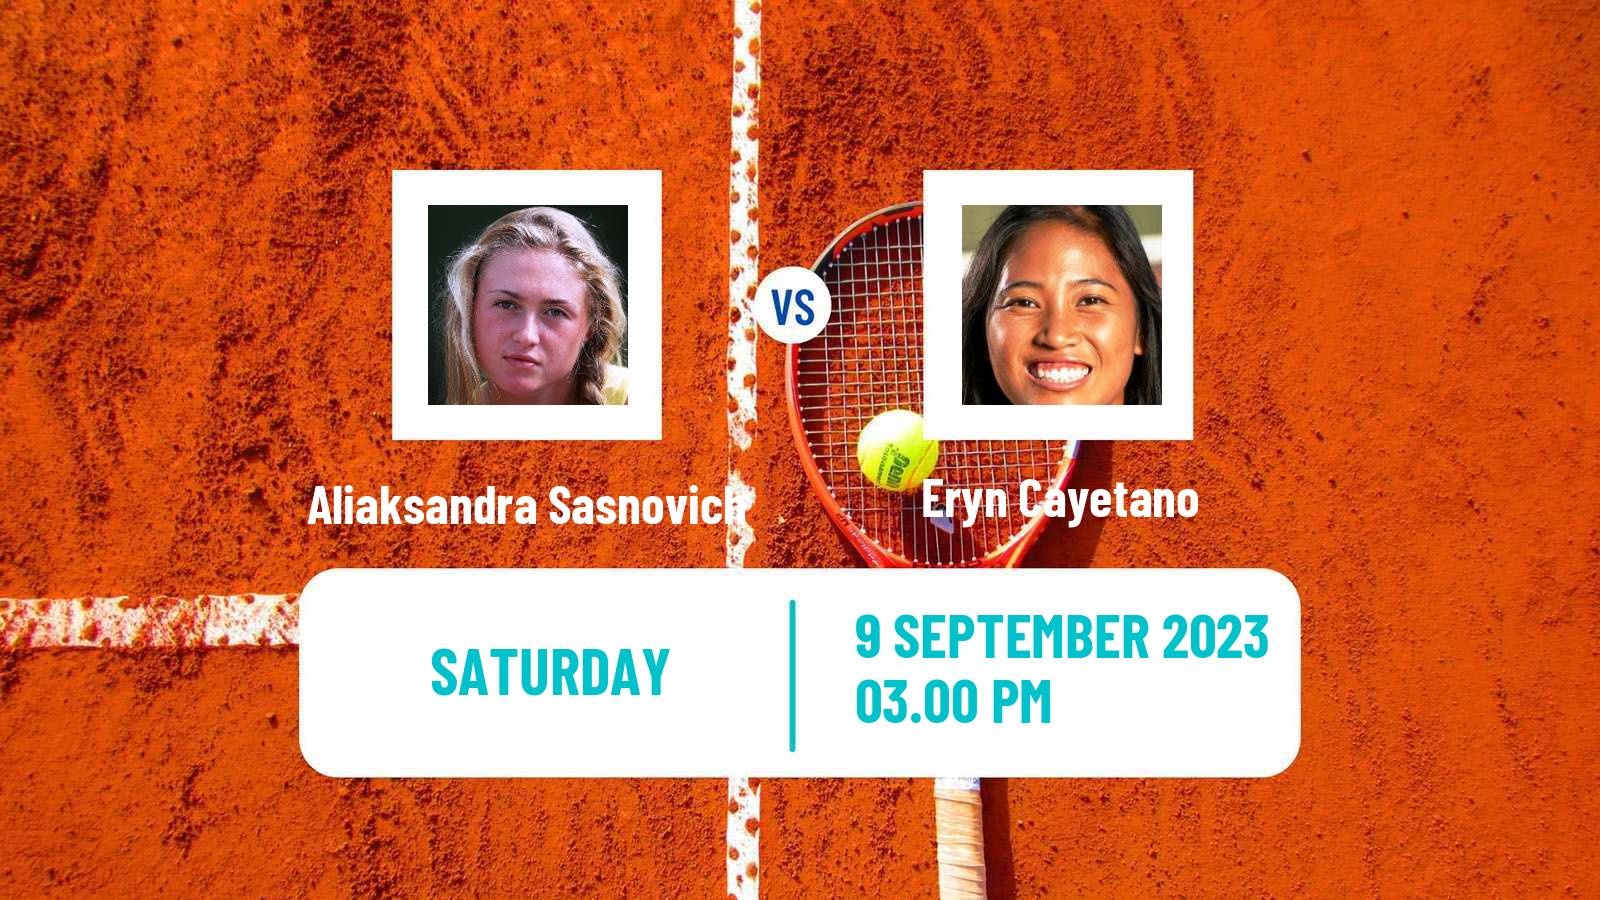 Tennis WTA San Diego Aliaksandra Sasnovich - Eryn Cayetano